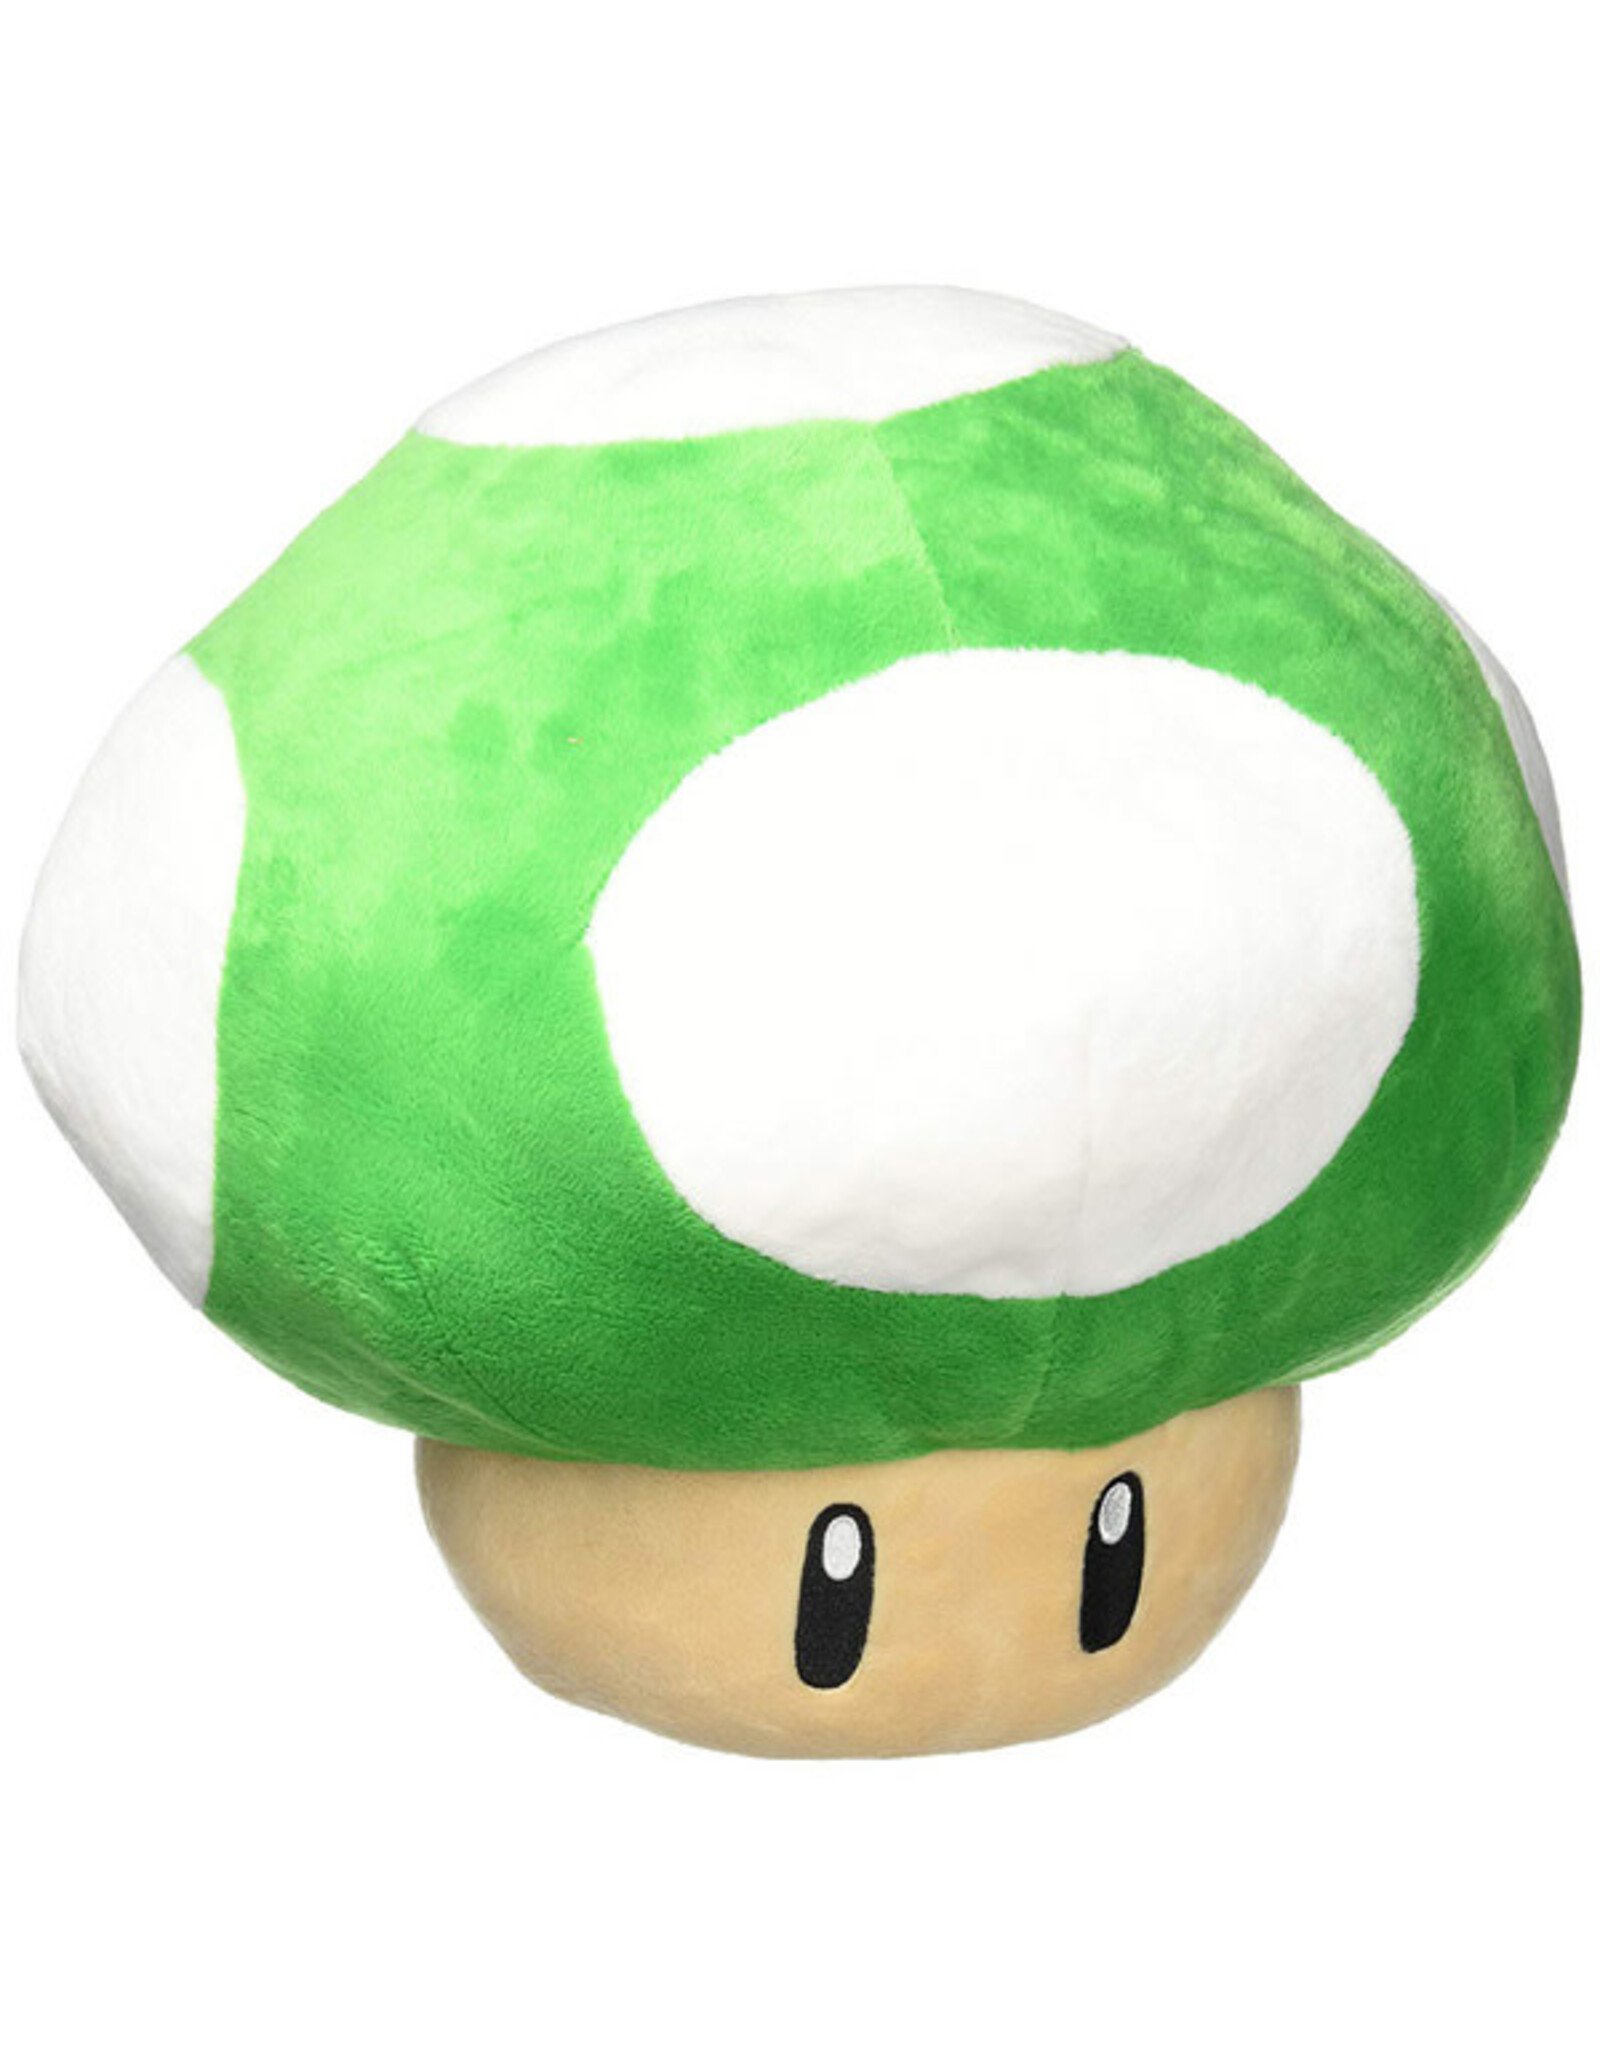 Takara Tomy Tomy - Super Mario - 1-UP Mushroom 15" Plush